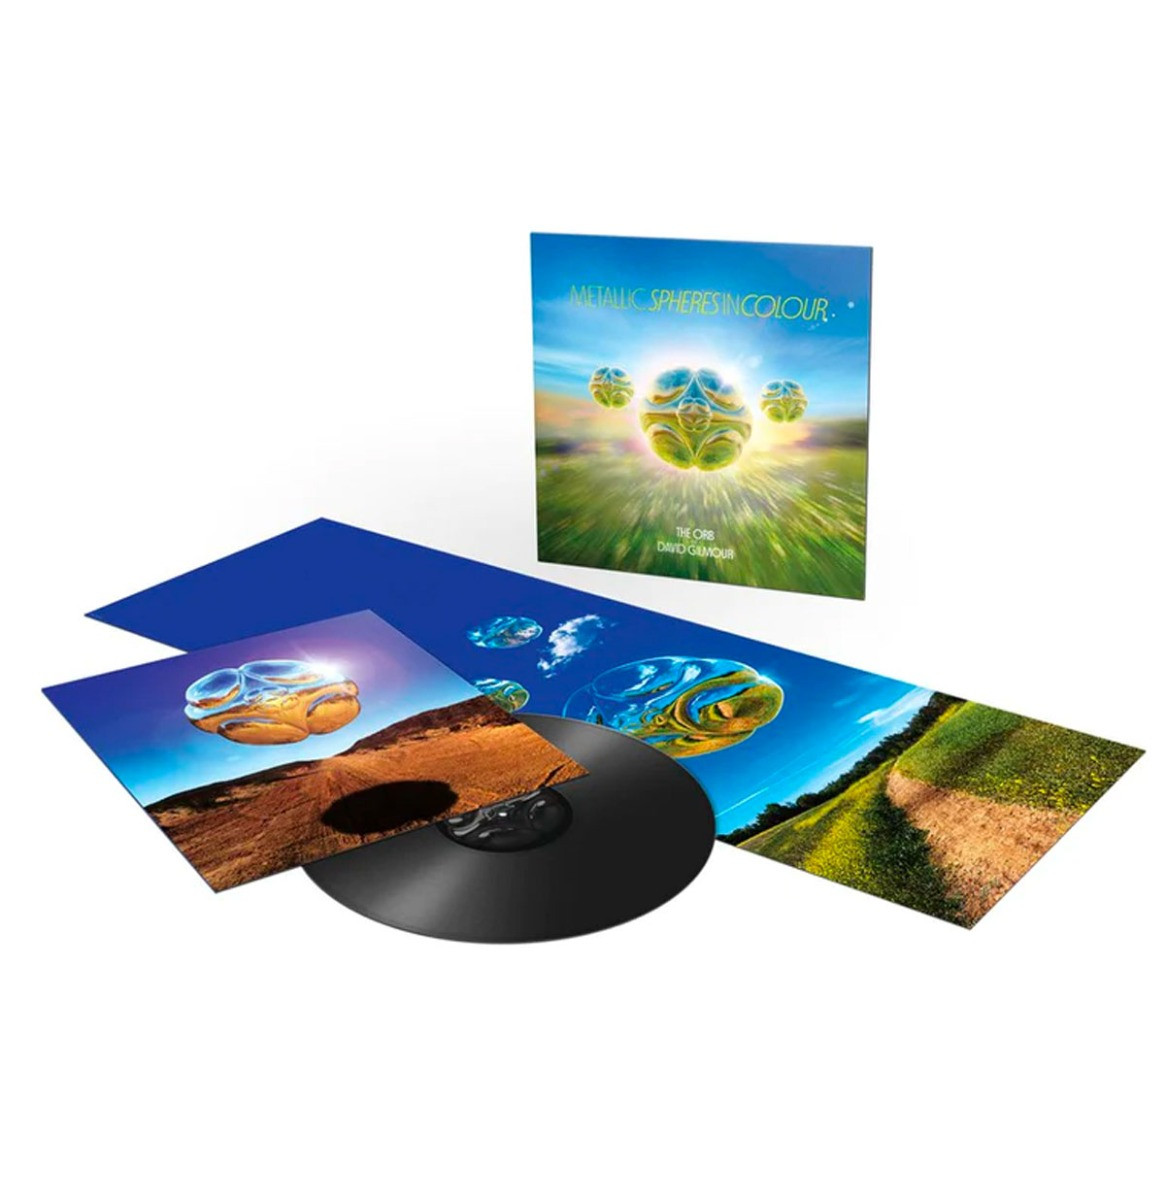 Orb & David Gilmour - Metallic Spheres In Colour LP